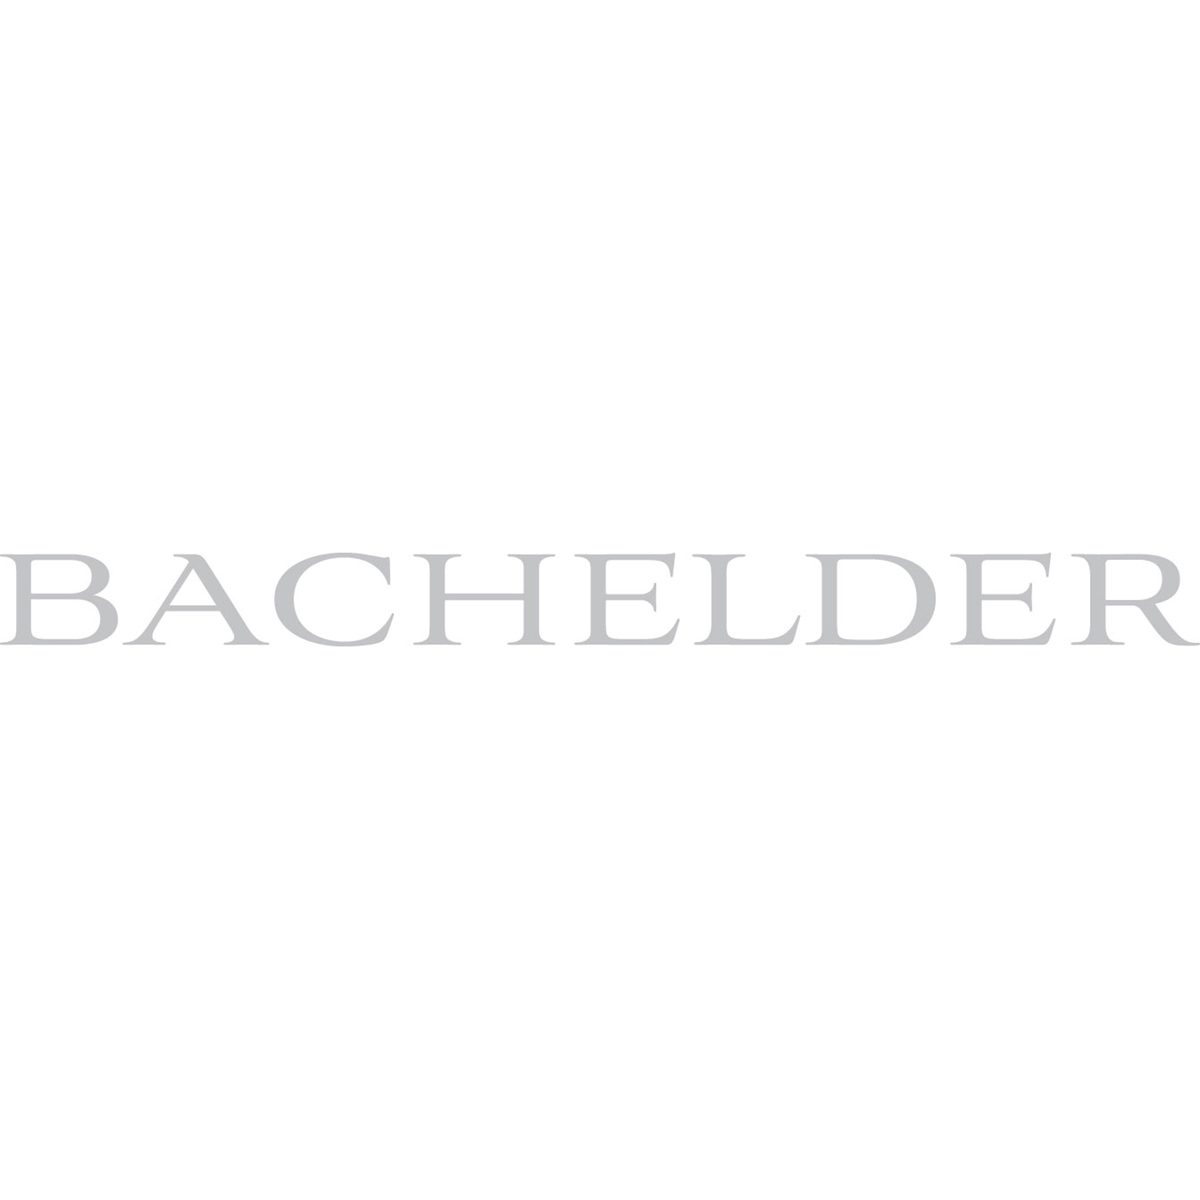 Bachelder - Ontario at its Best